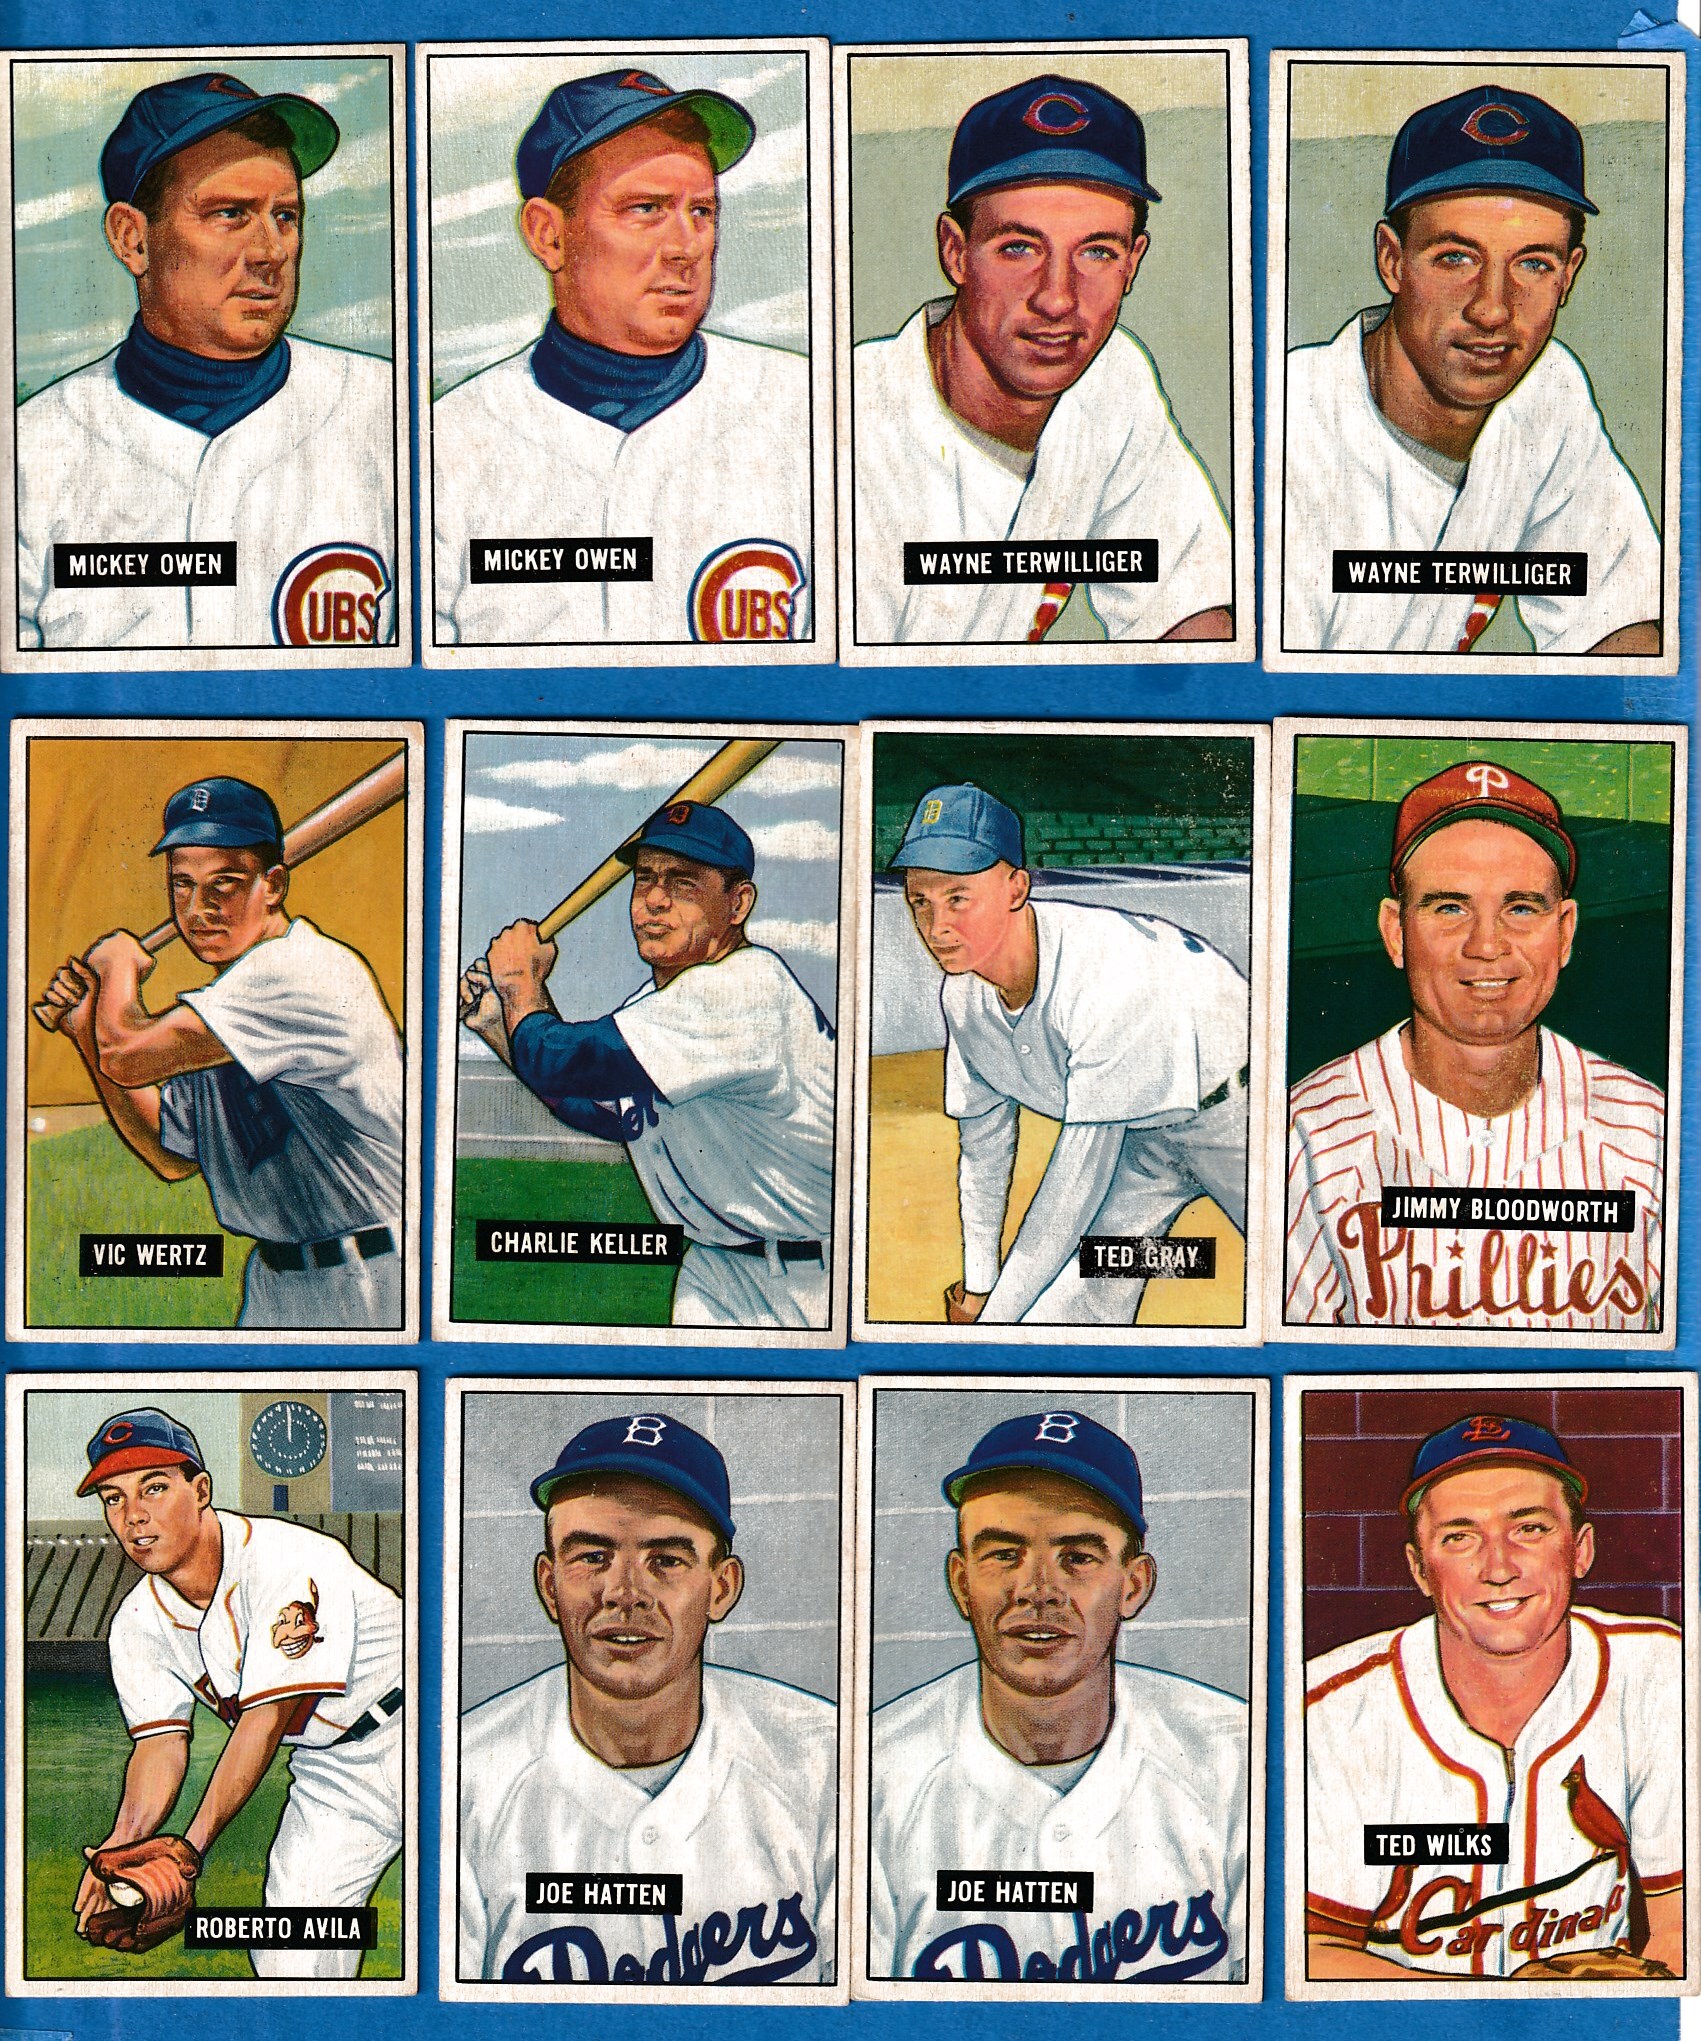 1951 Bowman #176 Vic Wertz [#r] (Tigers) Baseball cards value